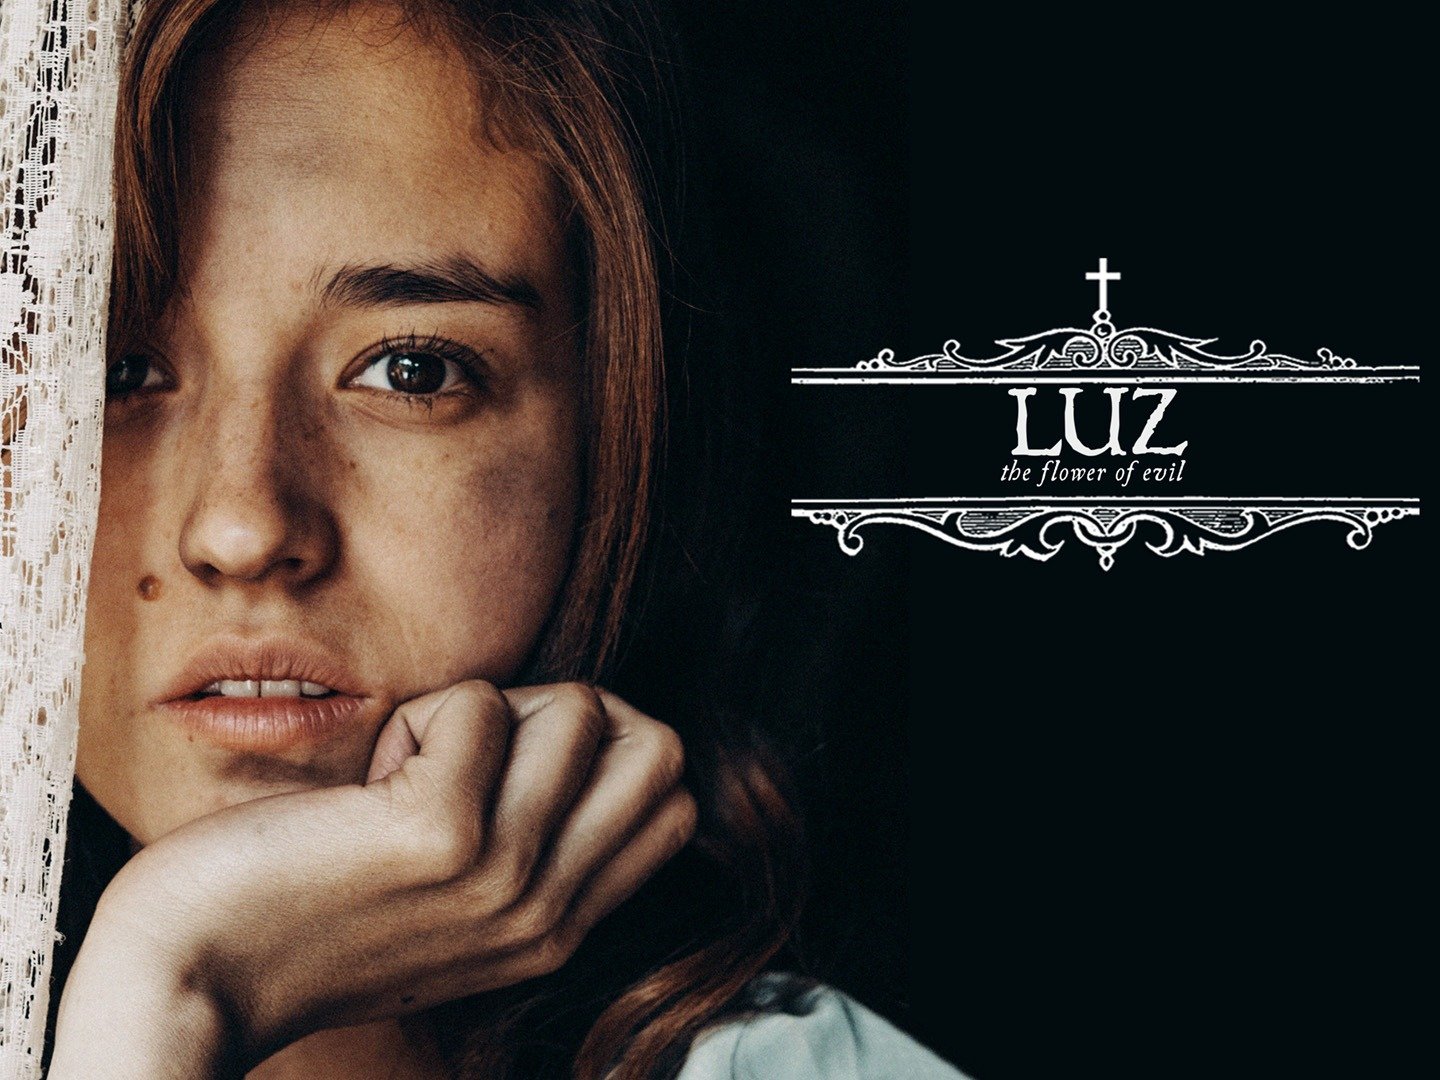 "Luz: The Flower of Evil photo 6"